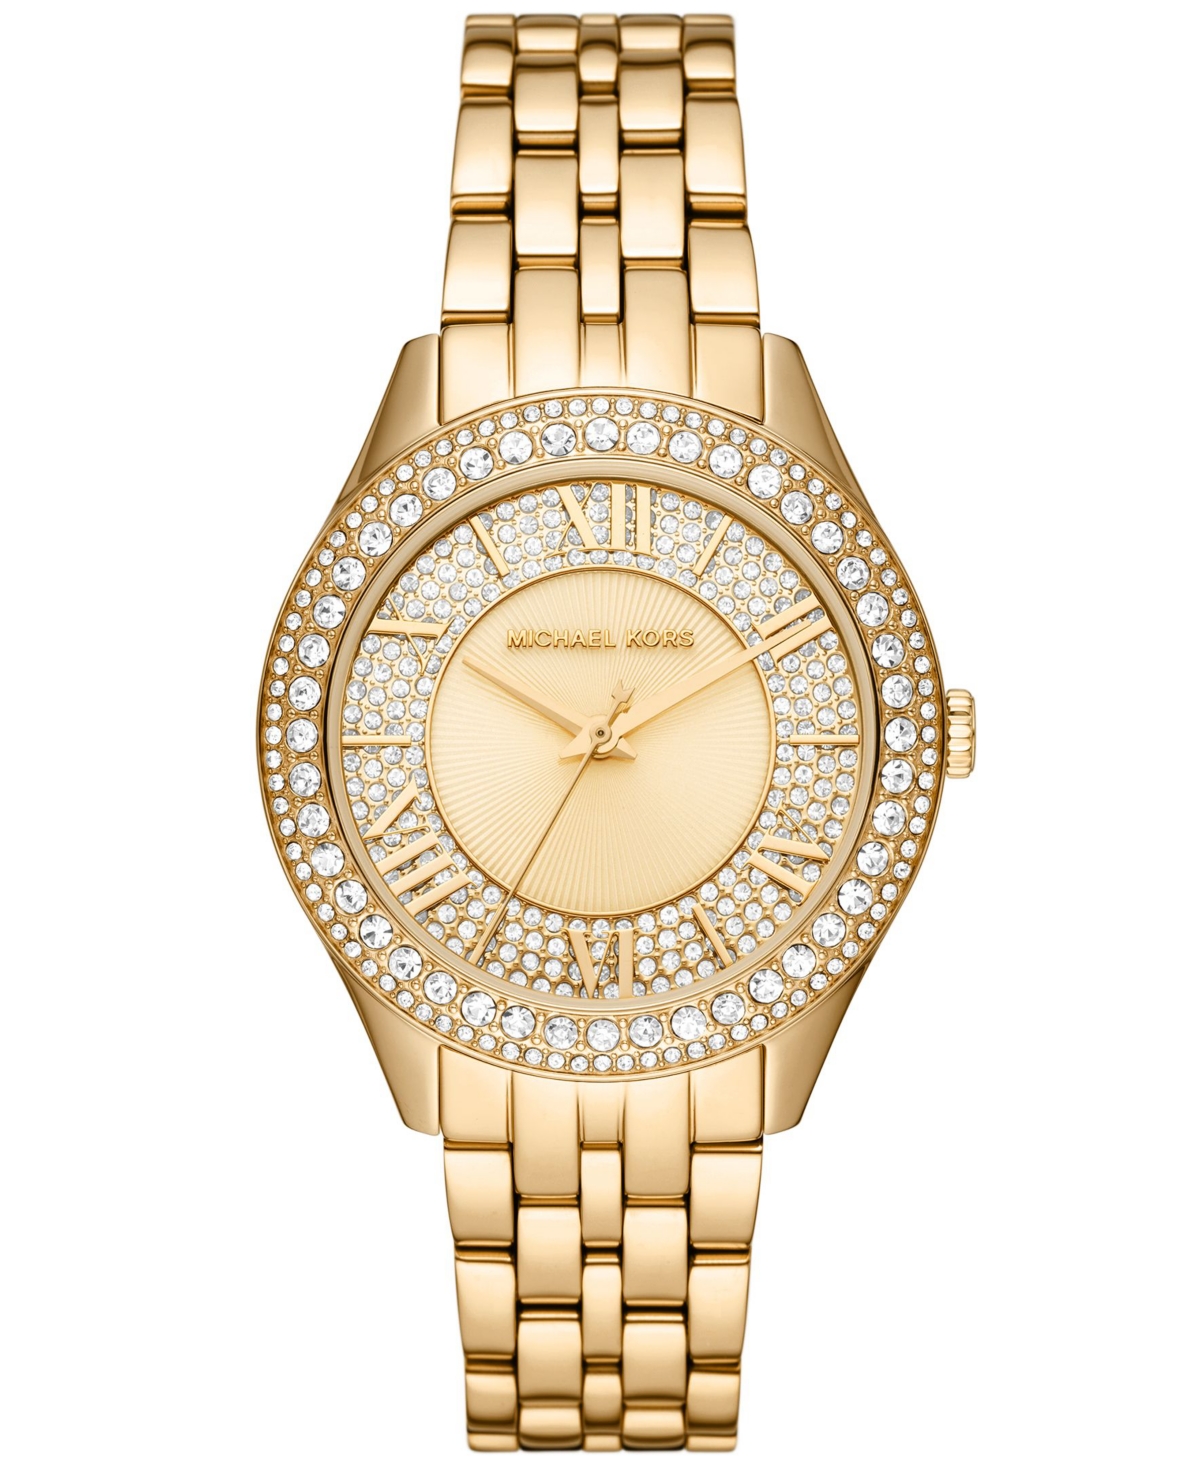 Michael Kors Women's Harlowe Three-hand Gold-tone Stainless Steel Bracelet Watch, 38mm